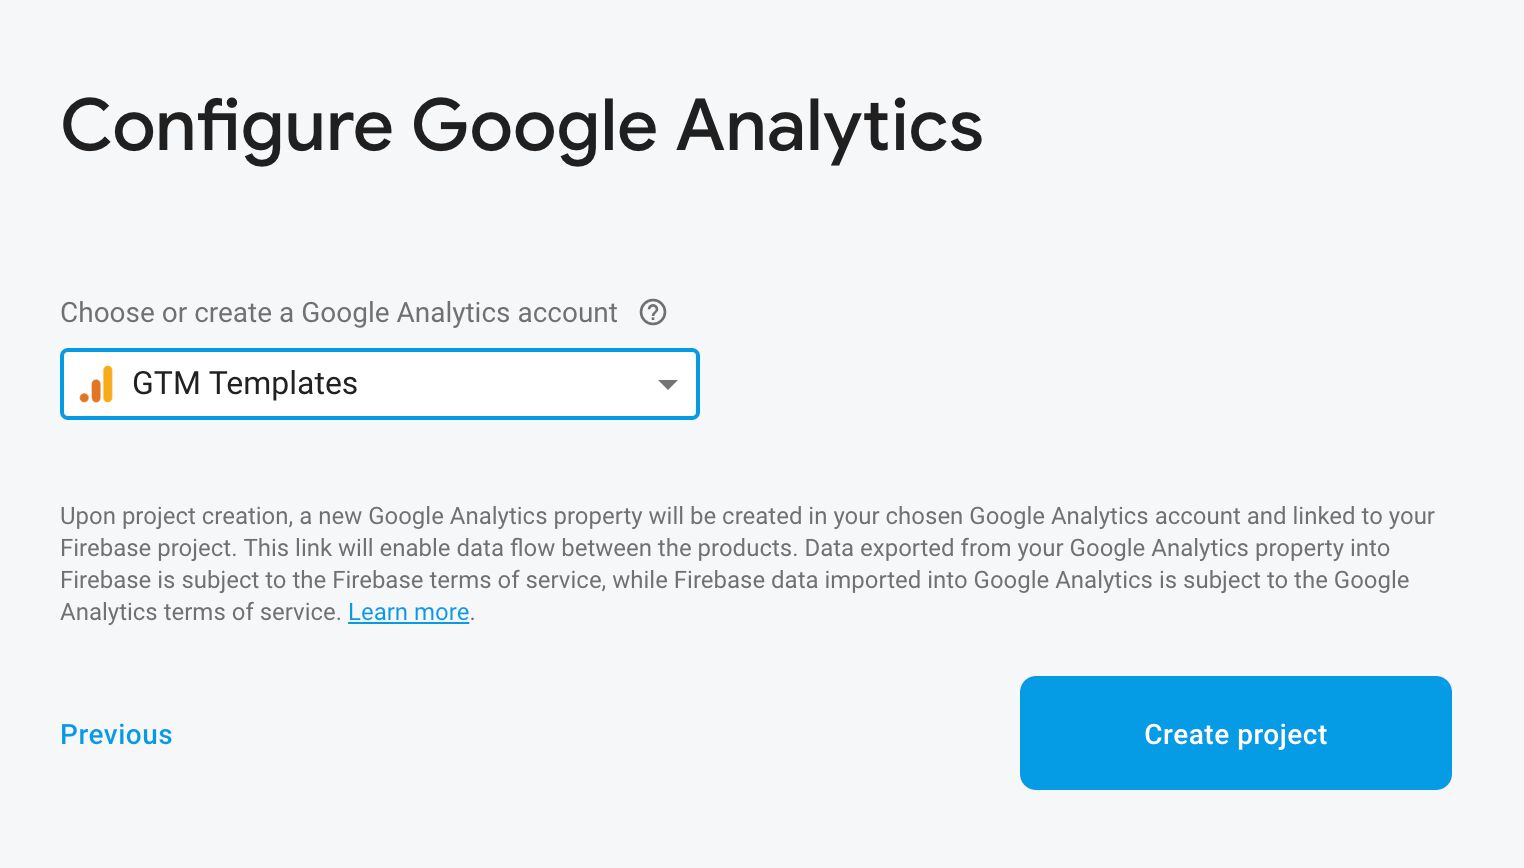 Configure Google Analytics